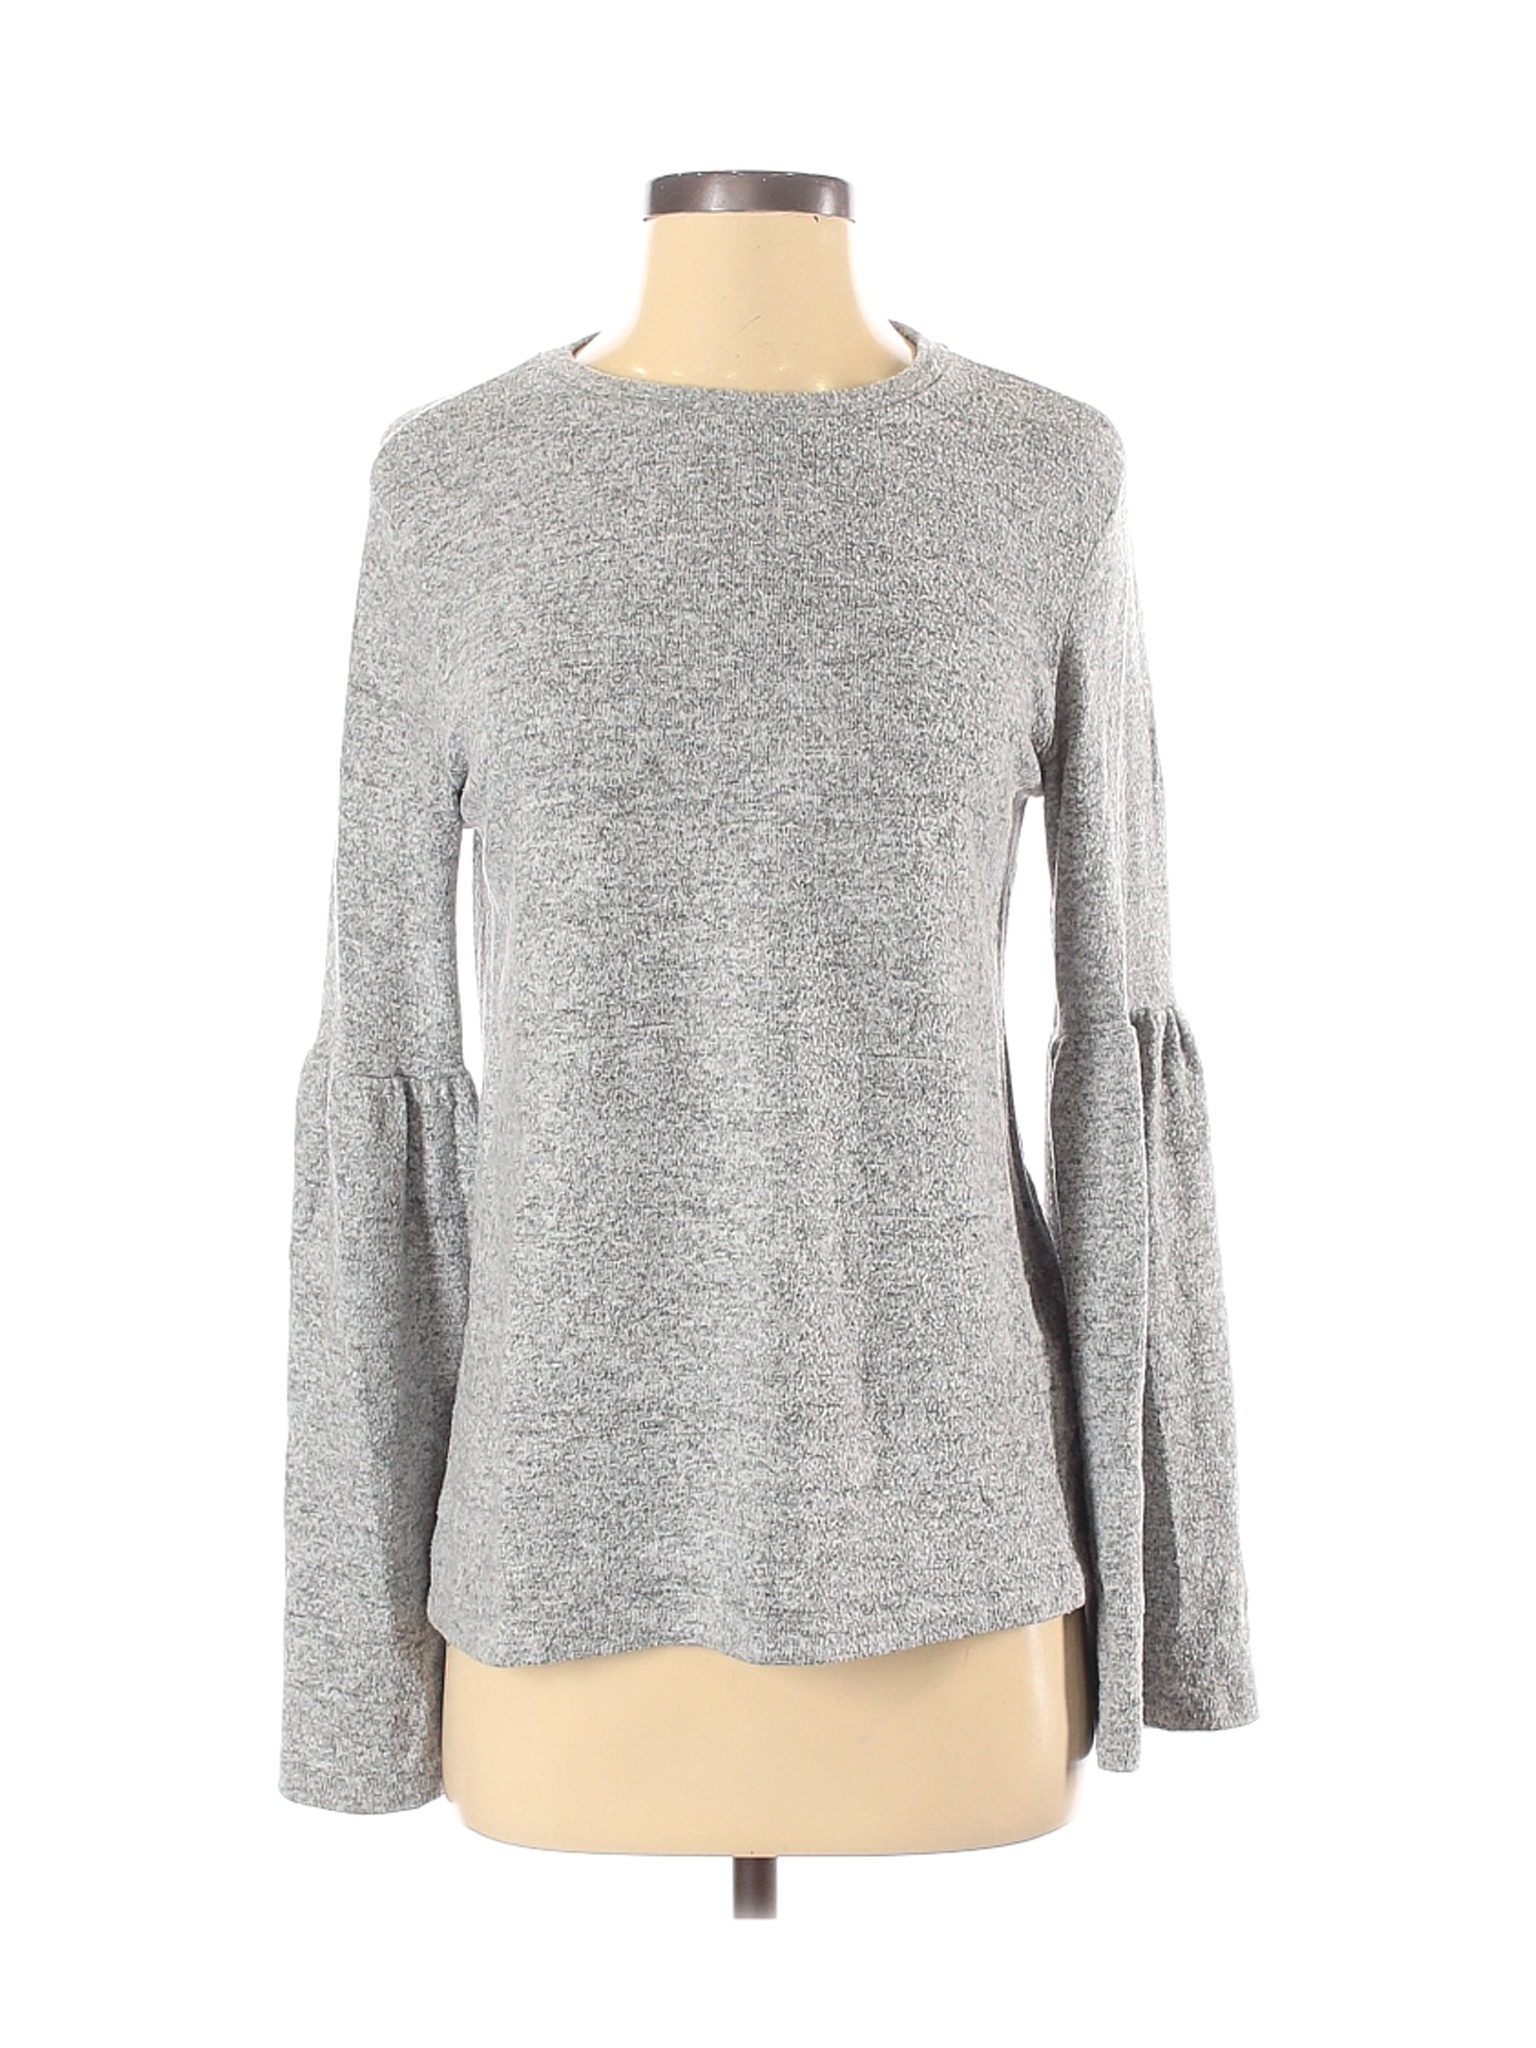 Trafaluc by Zara Women Gray Long Sleeve Top S | eBay